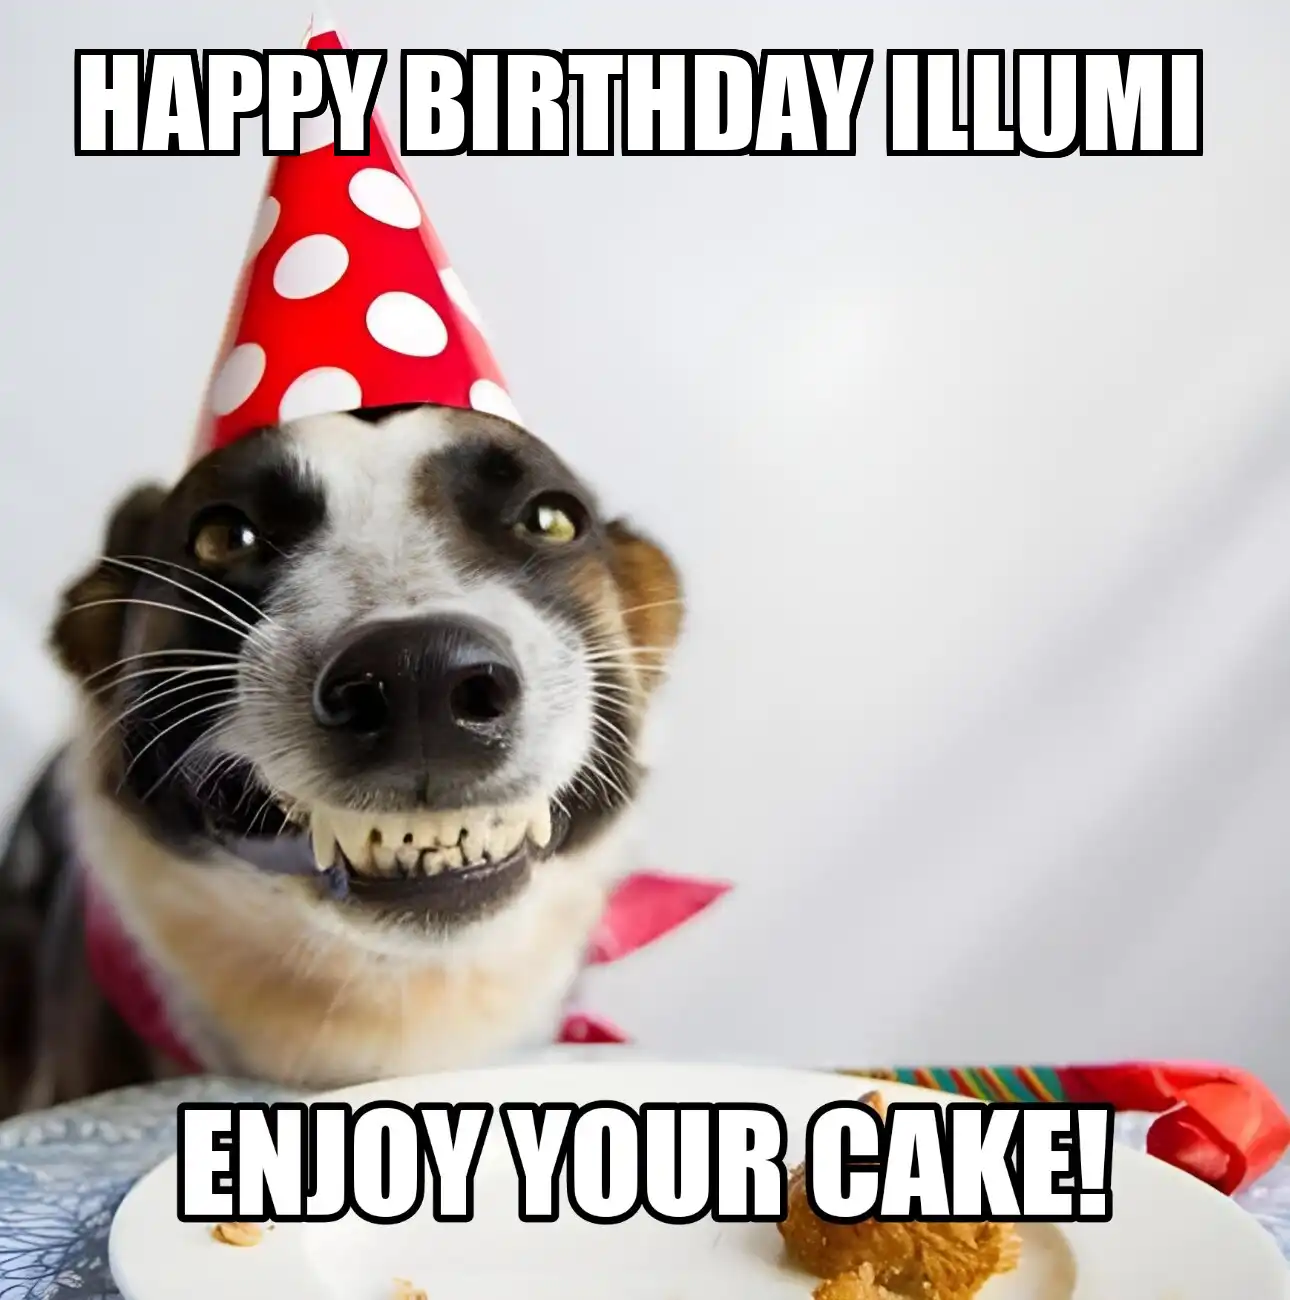 Happy Birthday Illumi Enjoy Your Cake Dog Meme